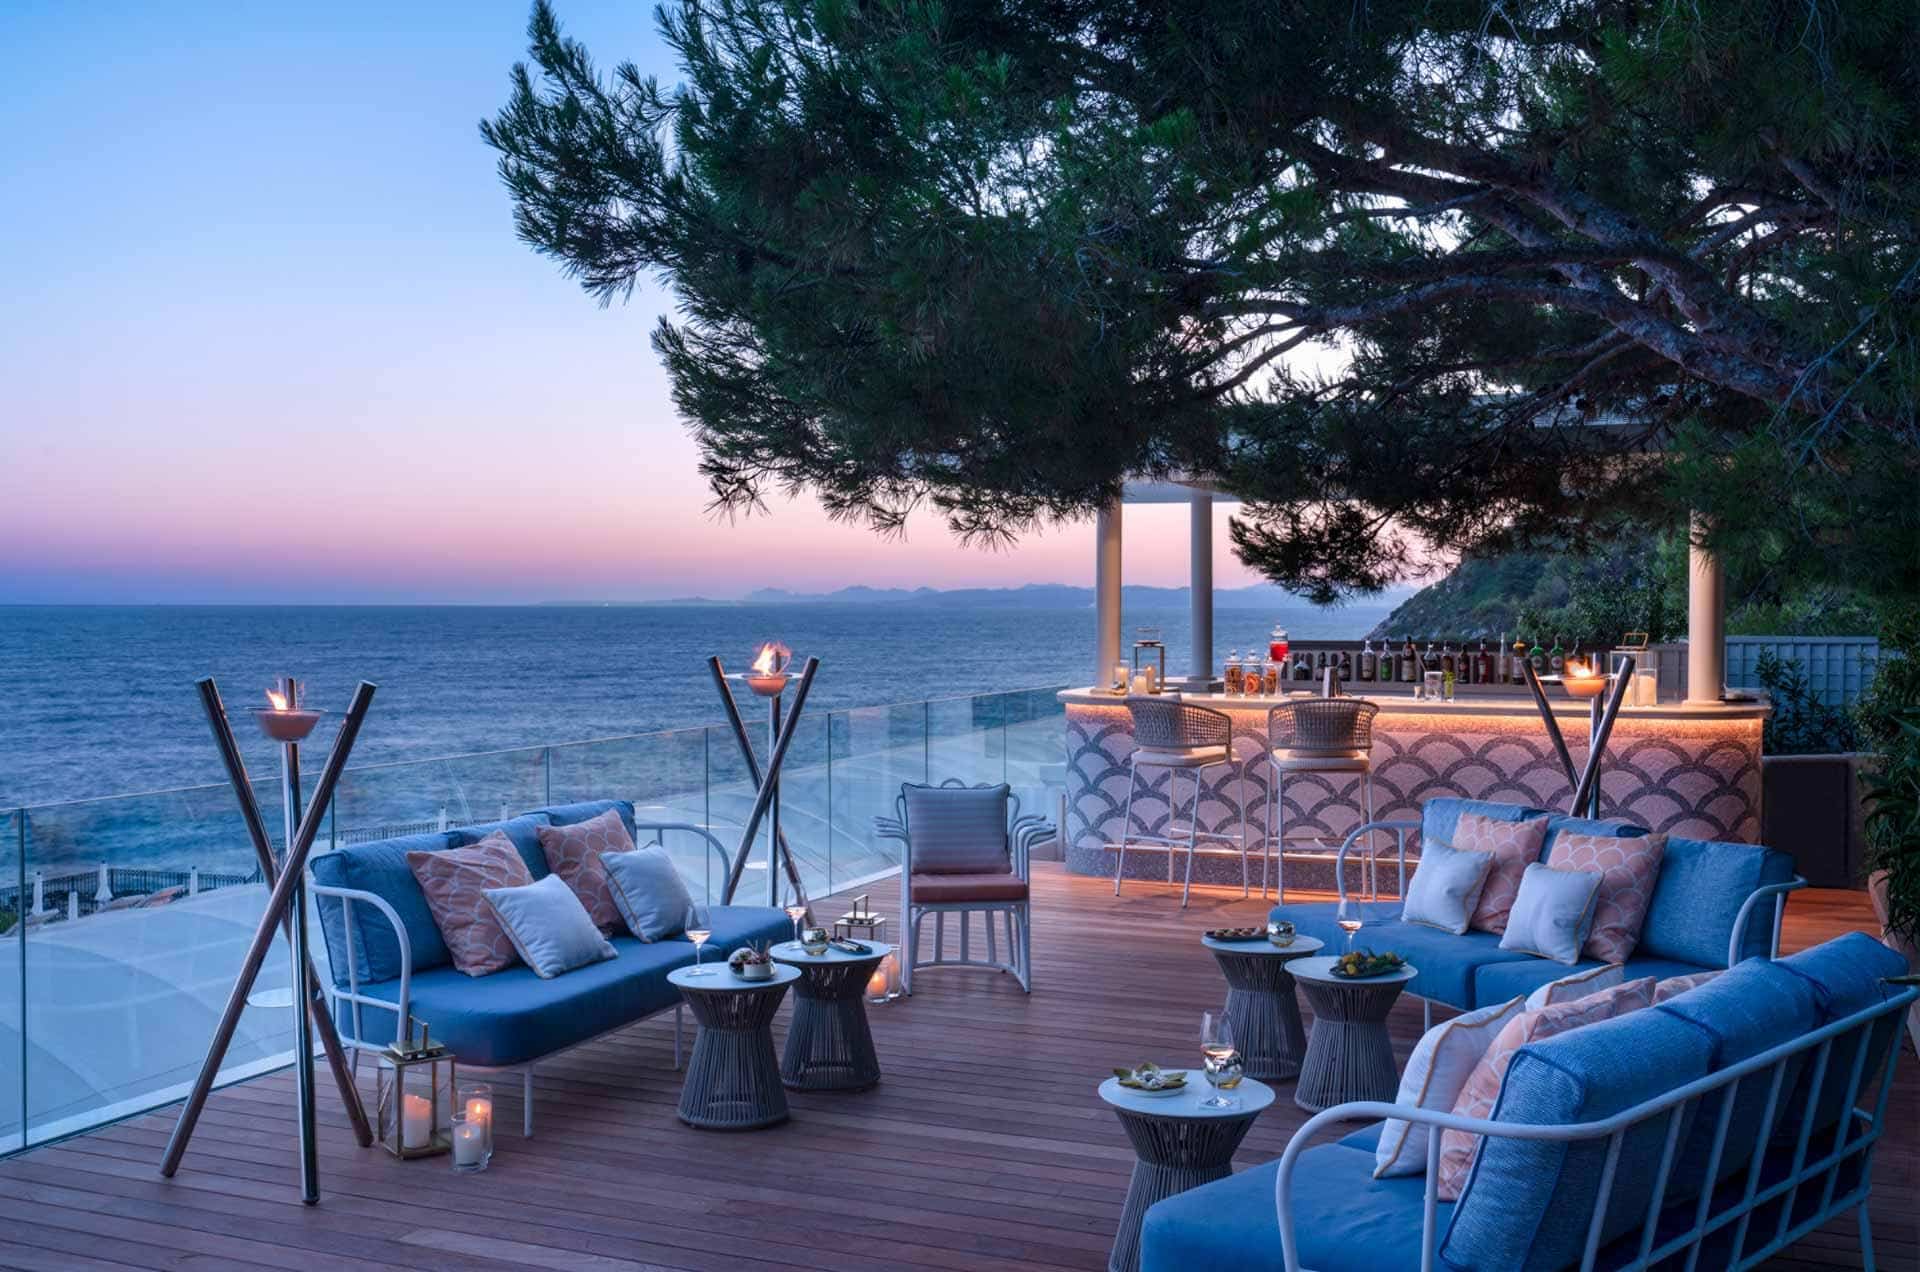 The best seaside hotels in Occitania